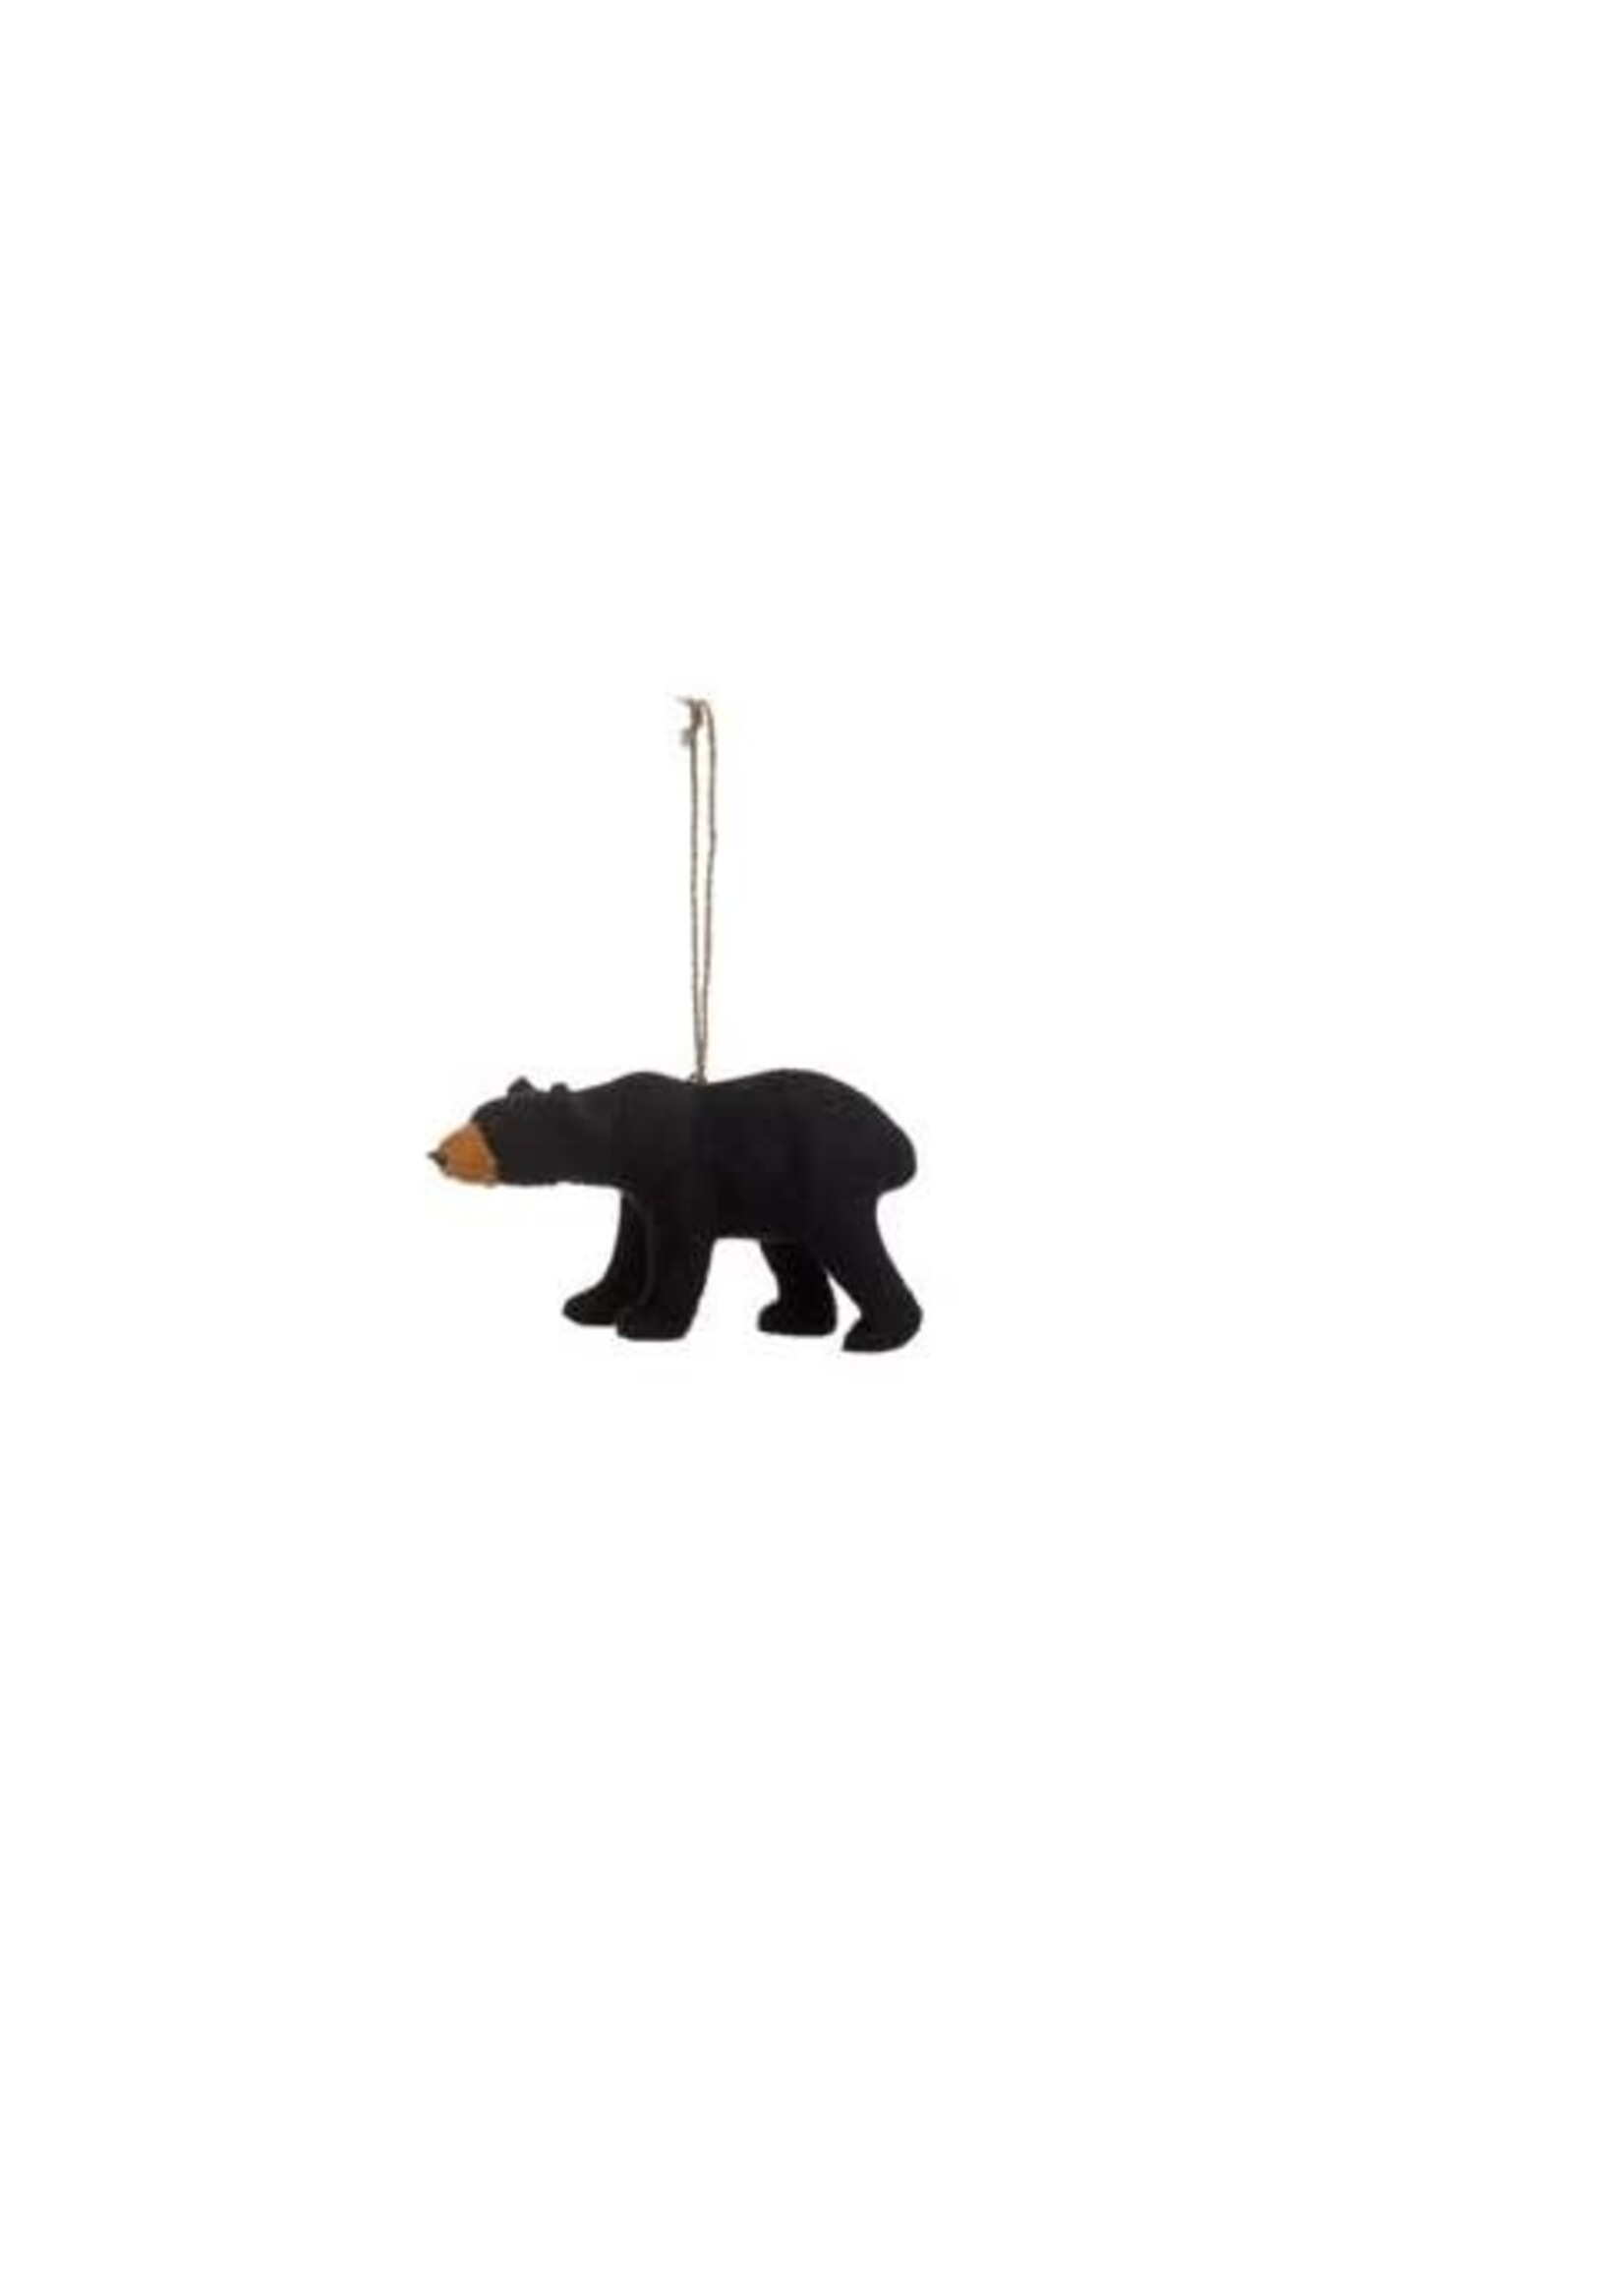 Faux Fur Black Bear Ornament - Head Down